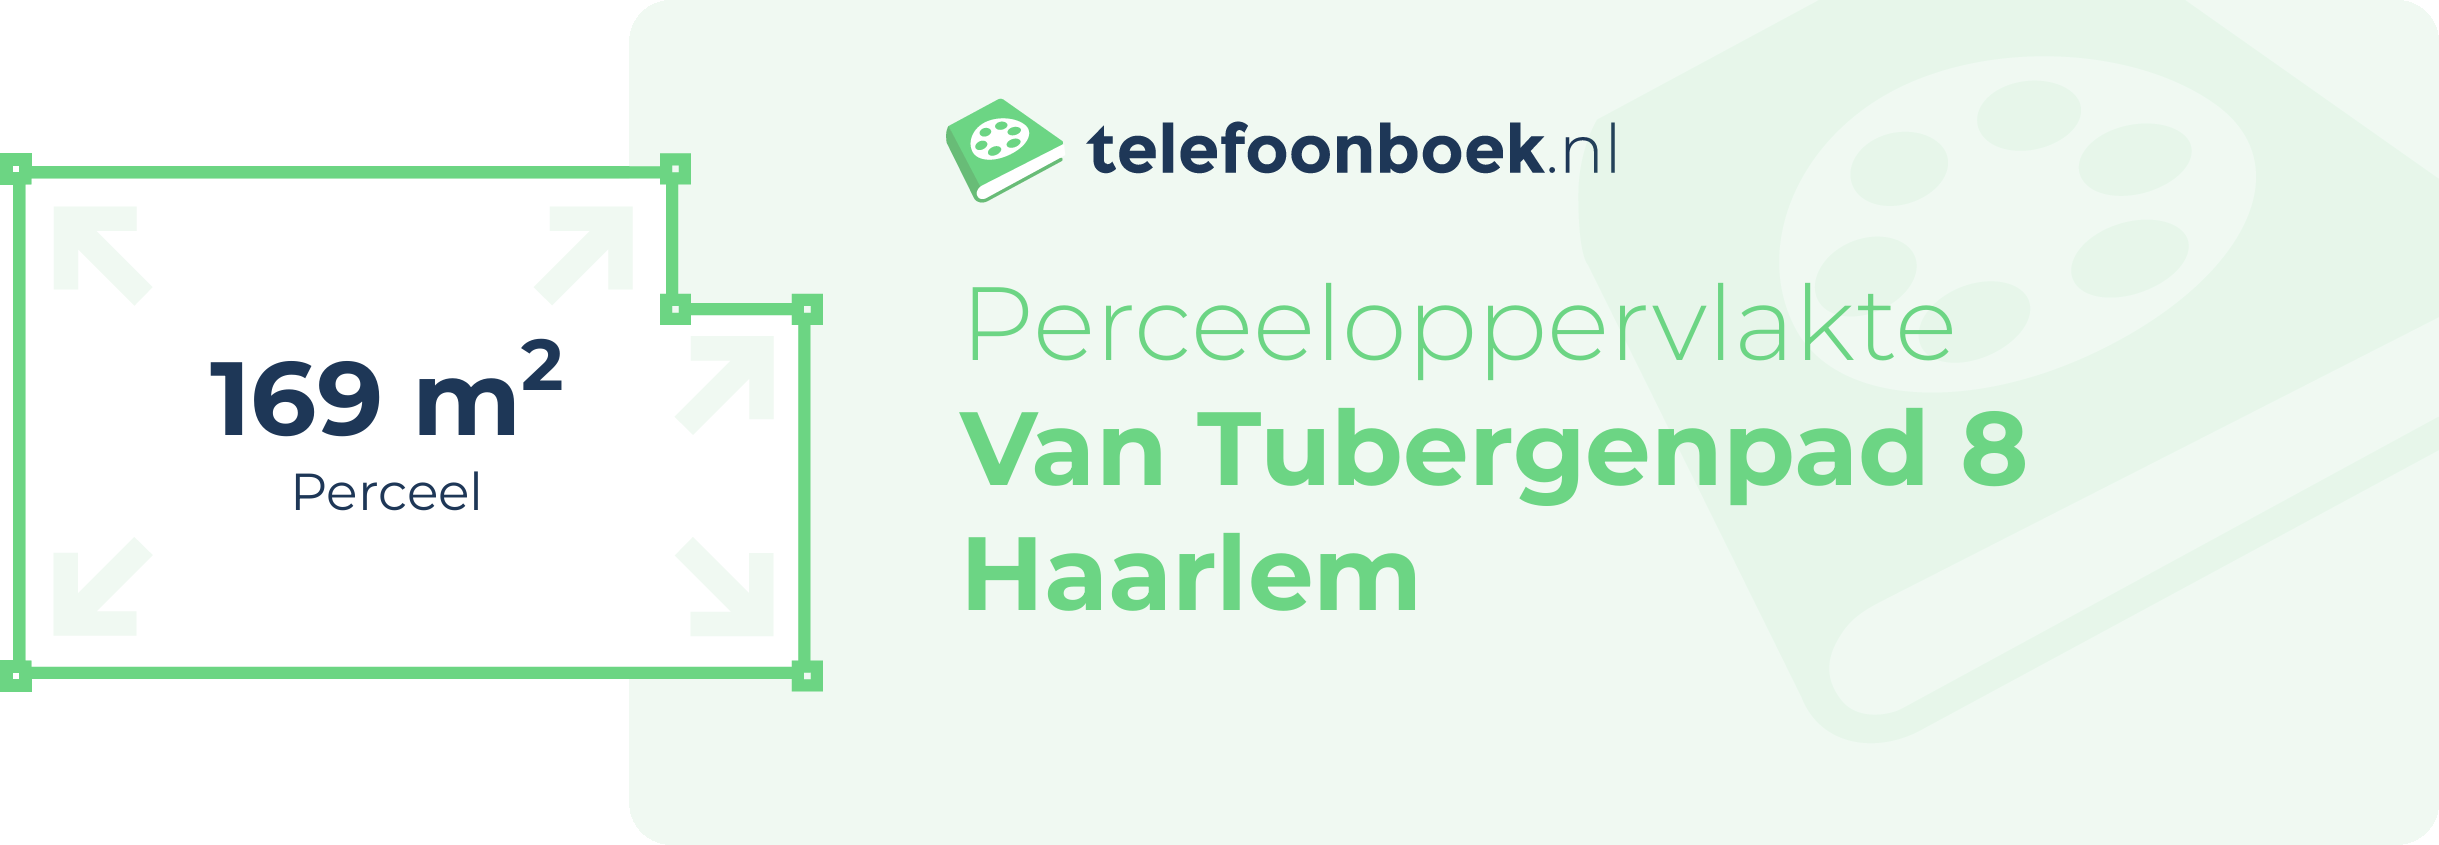 Perceeloppervlakte Van Tubergenpad 8 Haarlem